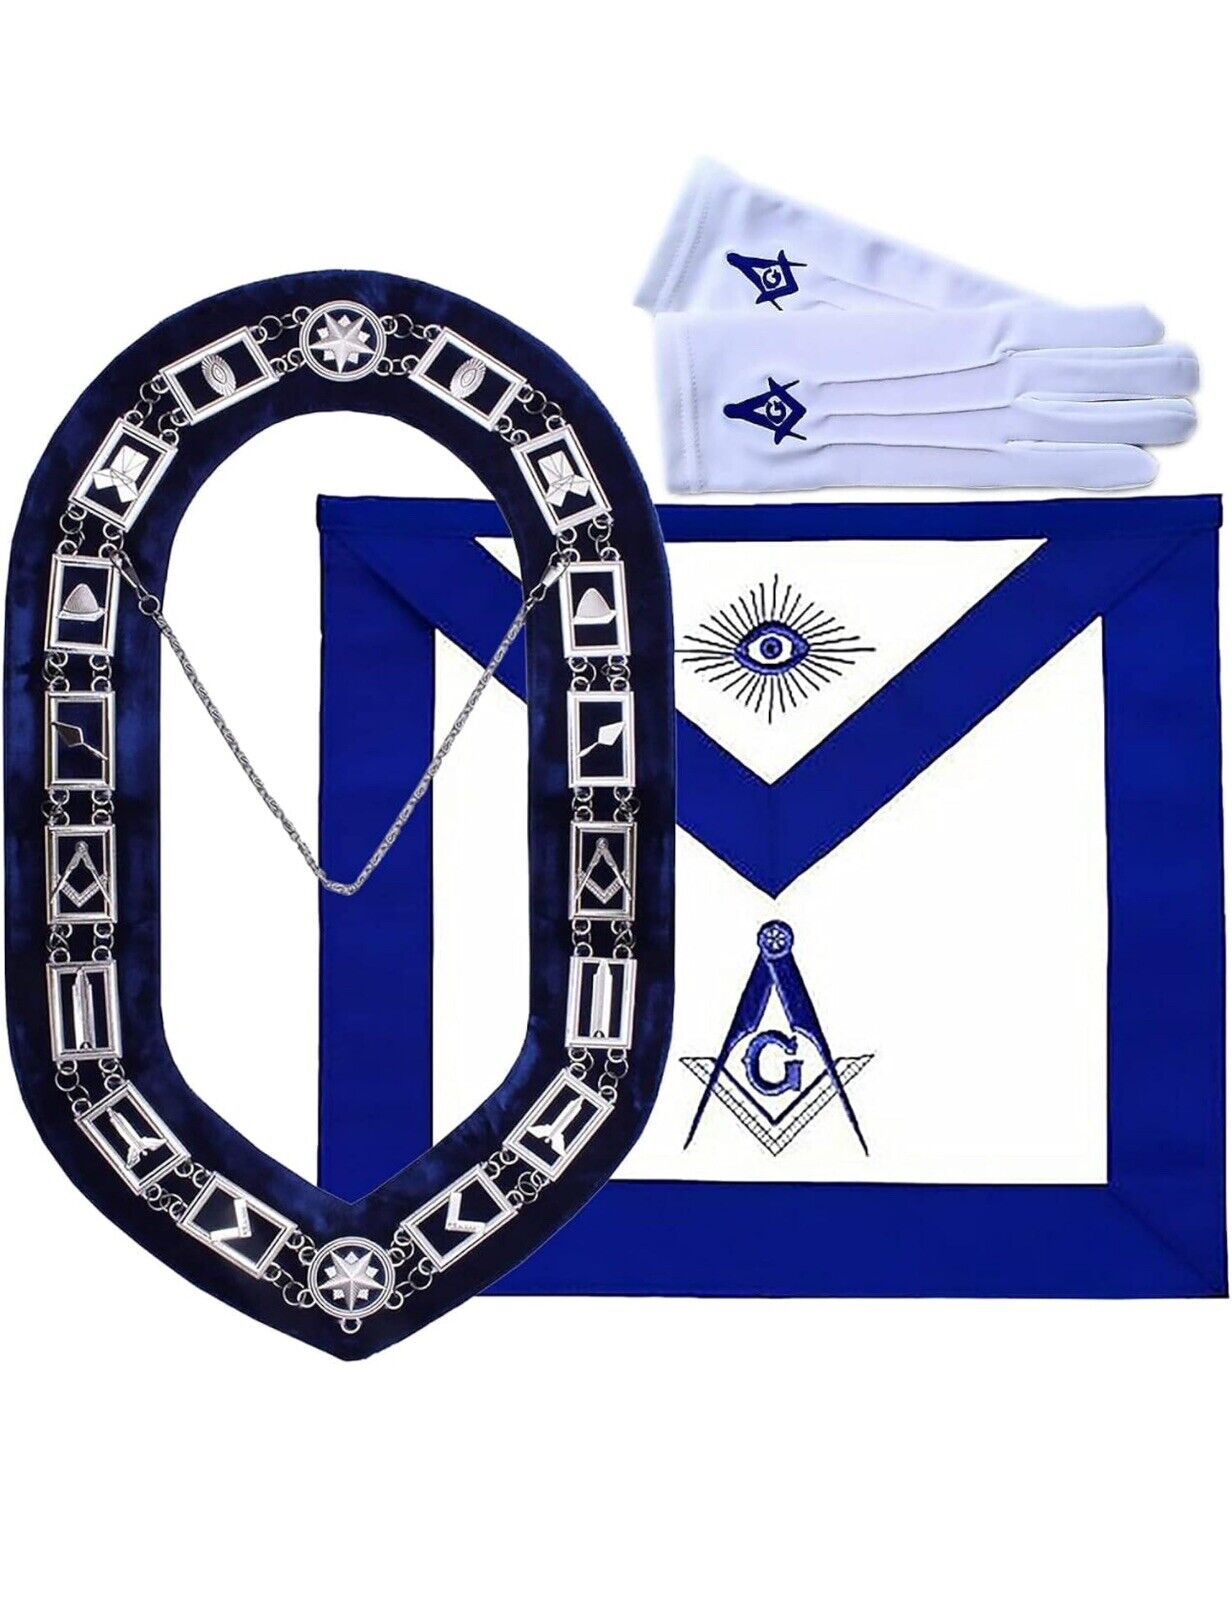  Blue Lodge Master Mason Apron, Chain Collar, Square and Compass Gloves Set